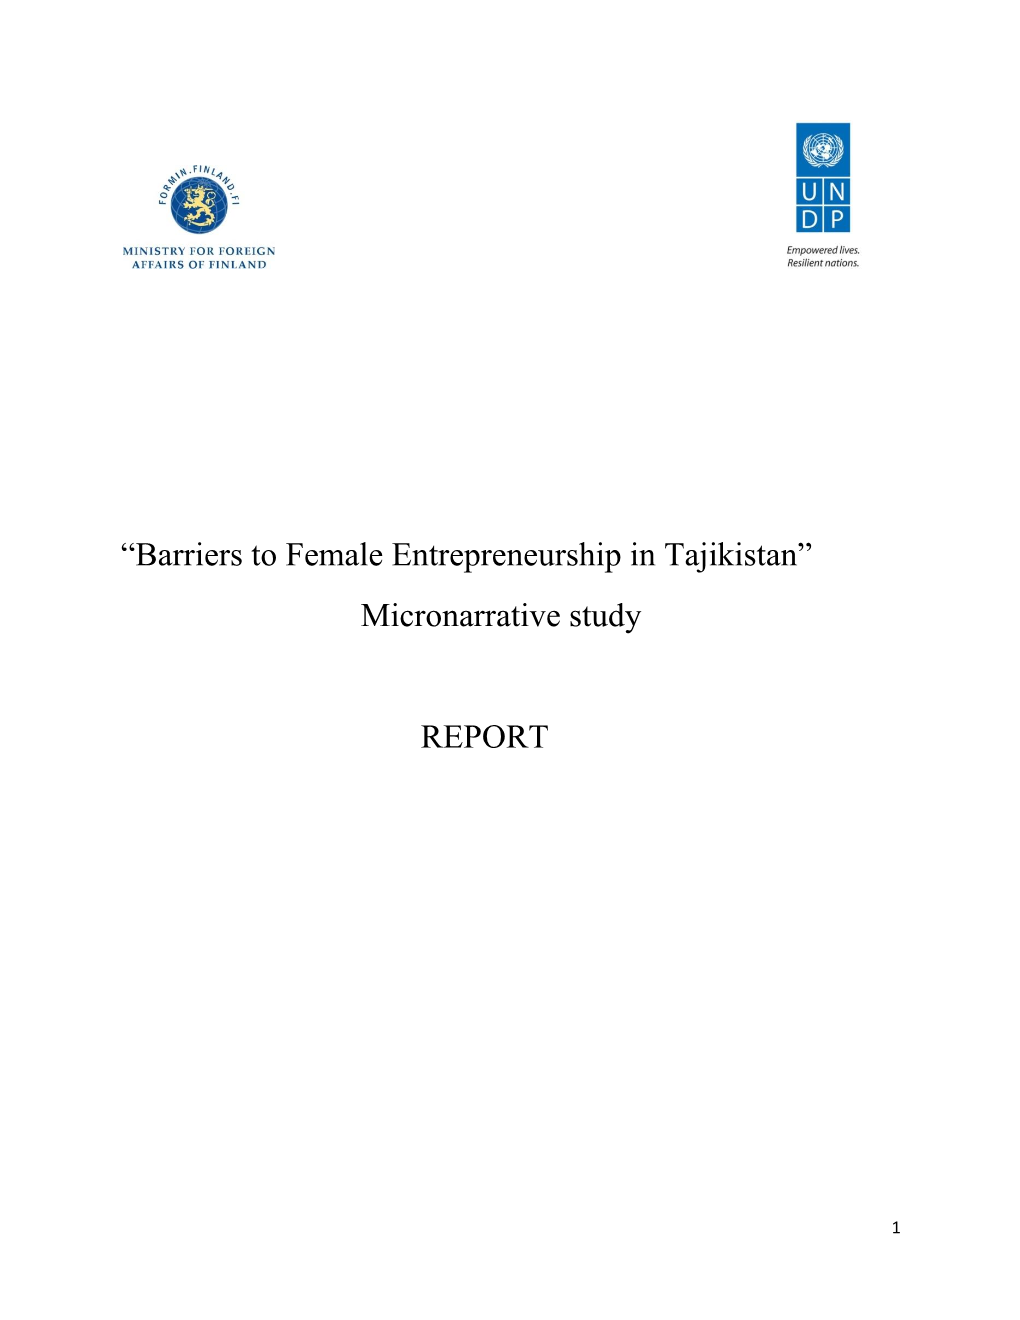 “Barriers to Female Entrepreneurship in Tajikistan” Micronarrative Study